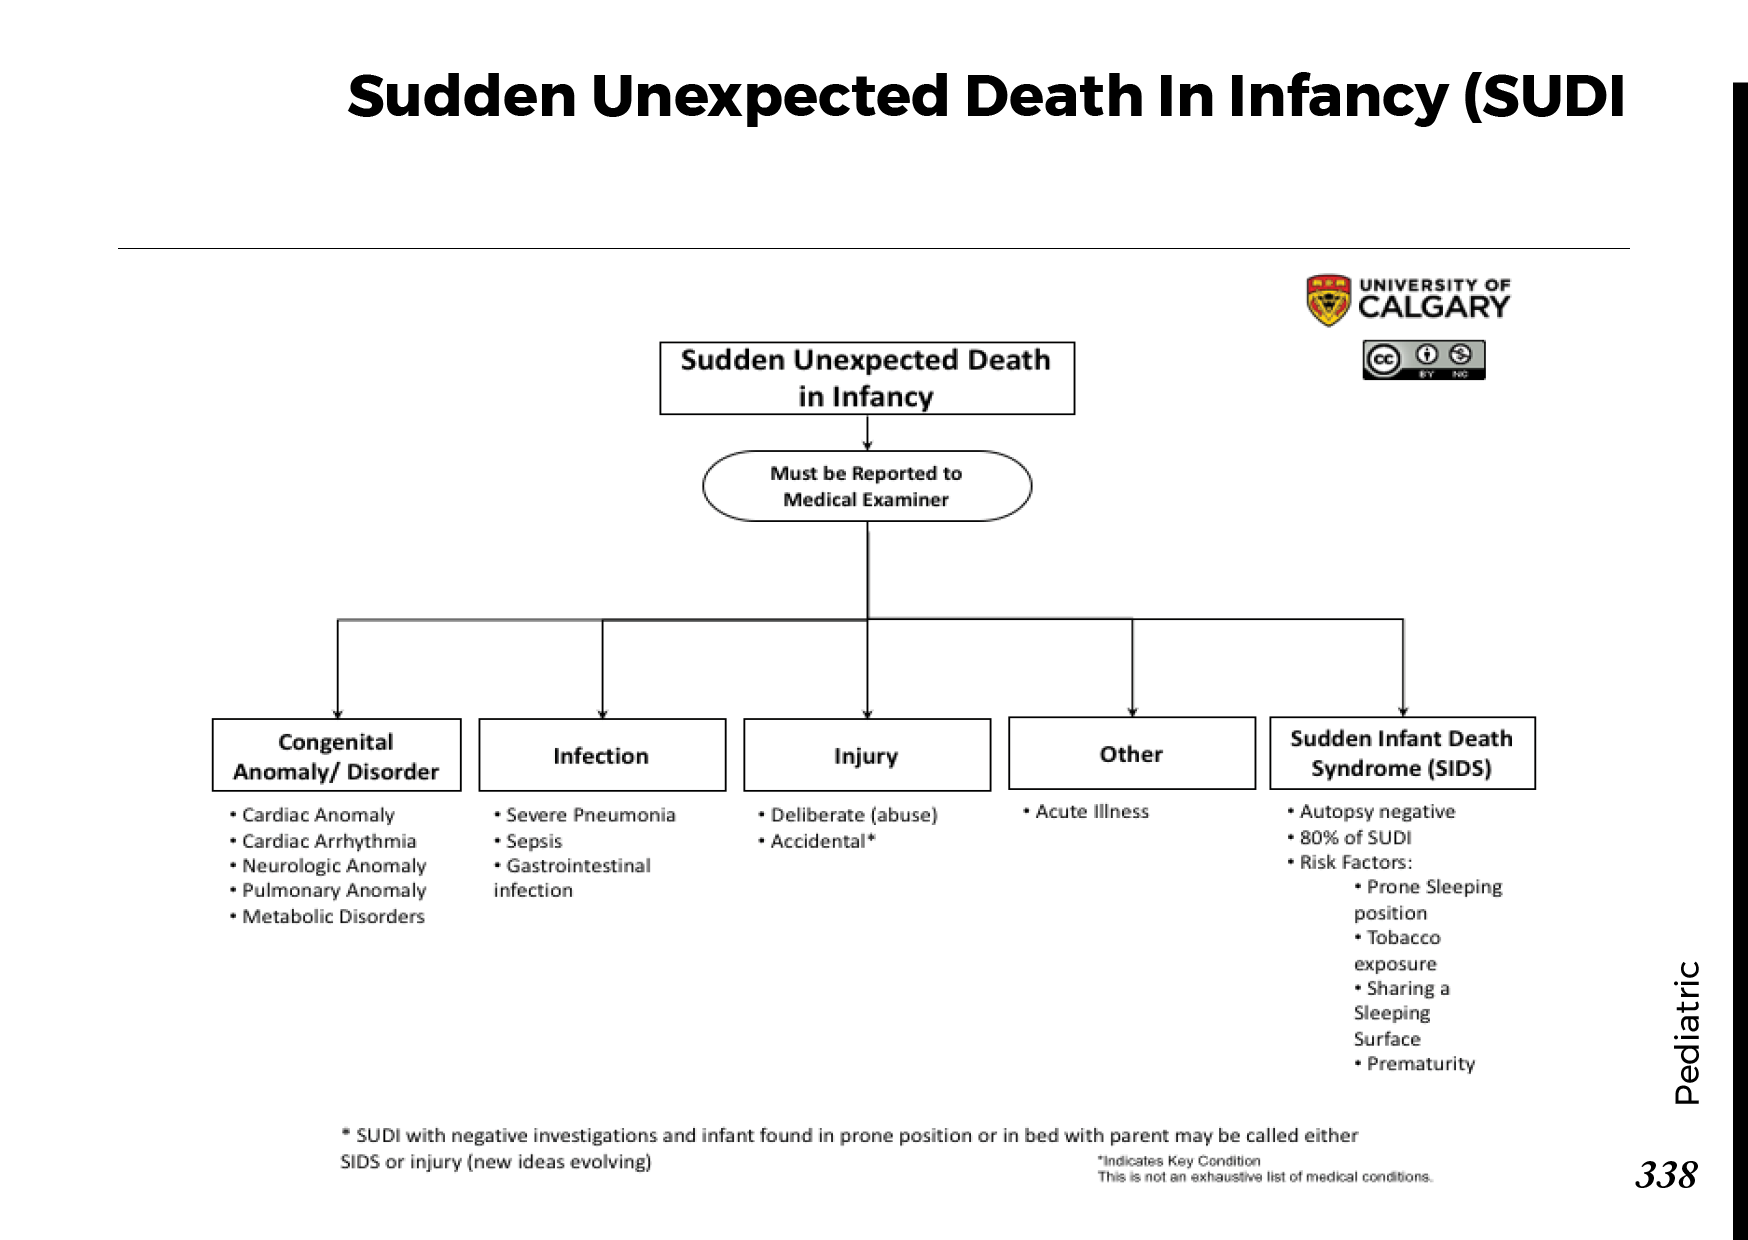 SUDDEN UNEXPECTED DEATH IN INFANCY (SUDI) Scheme